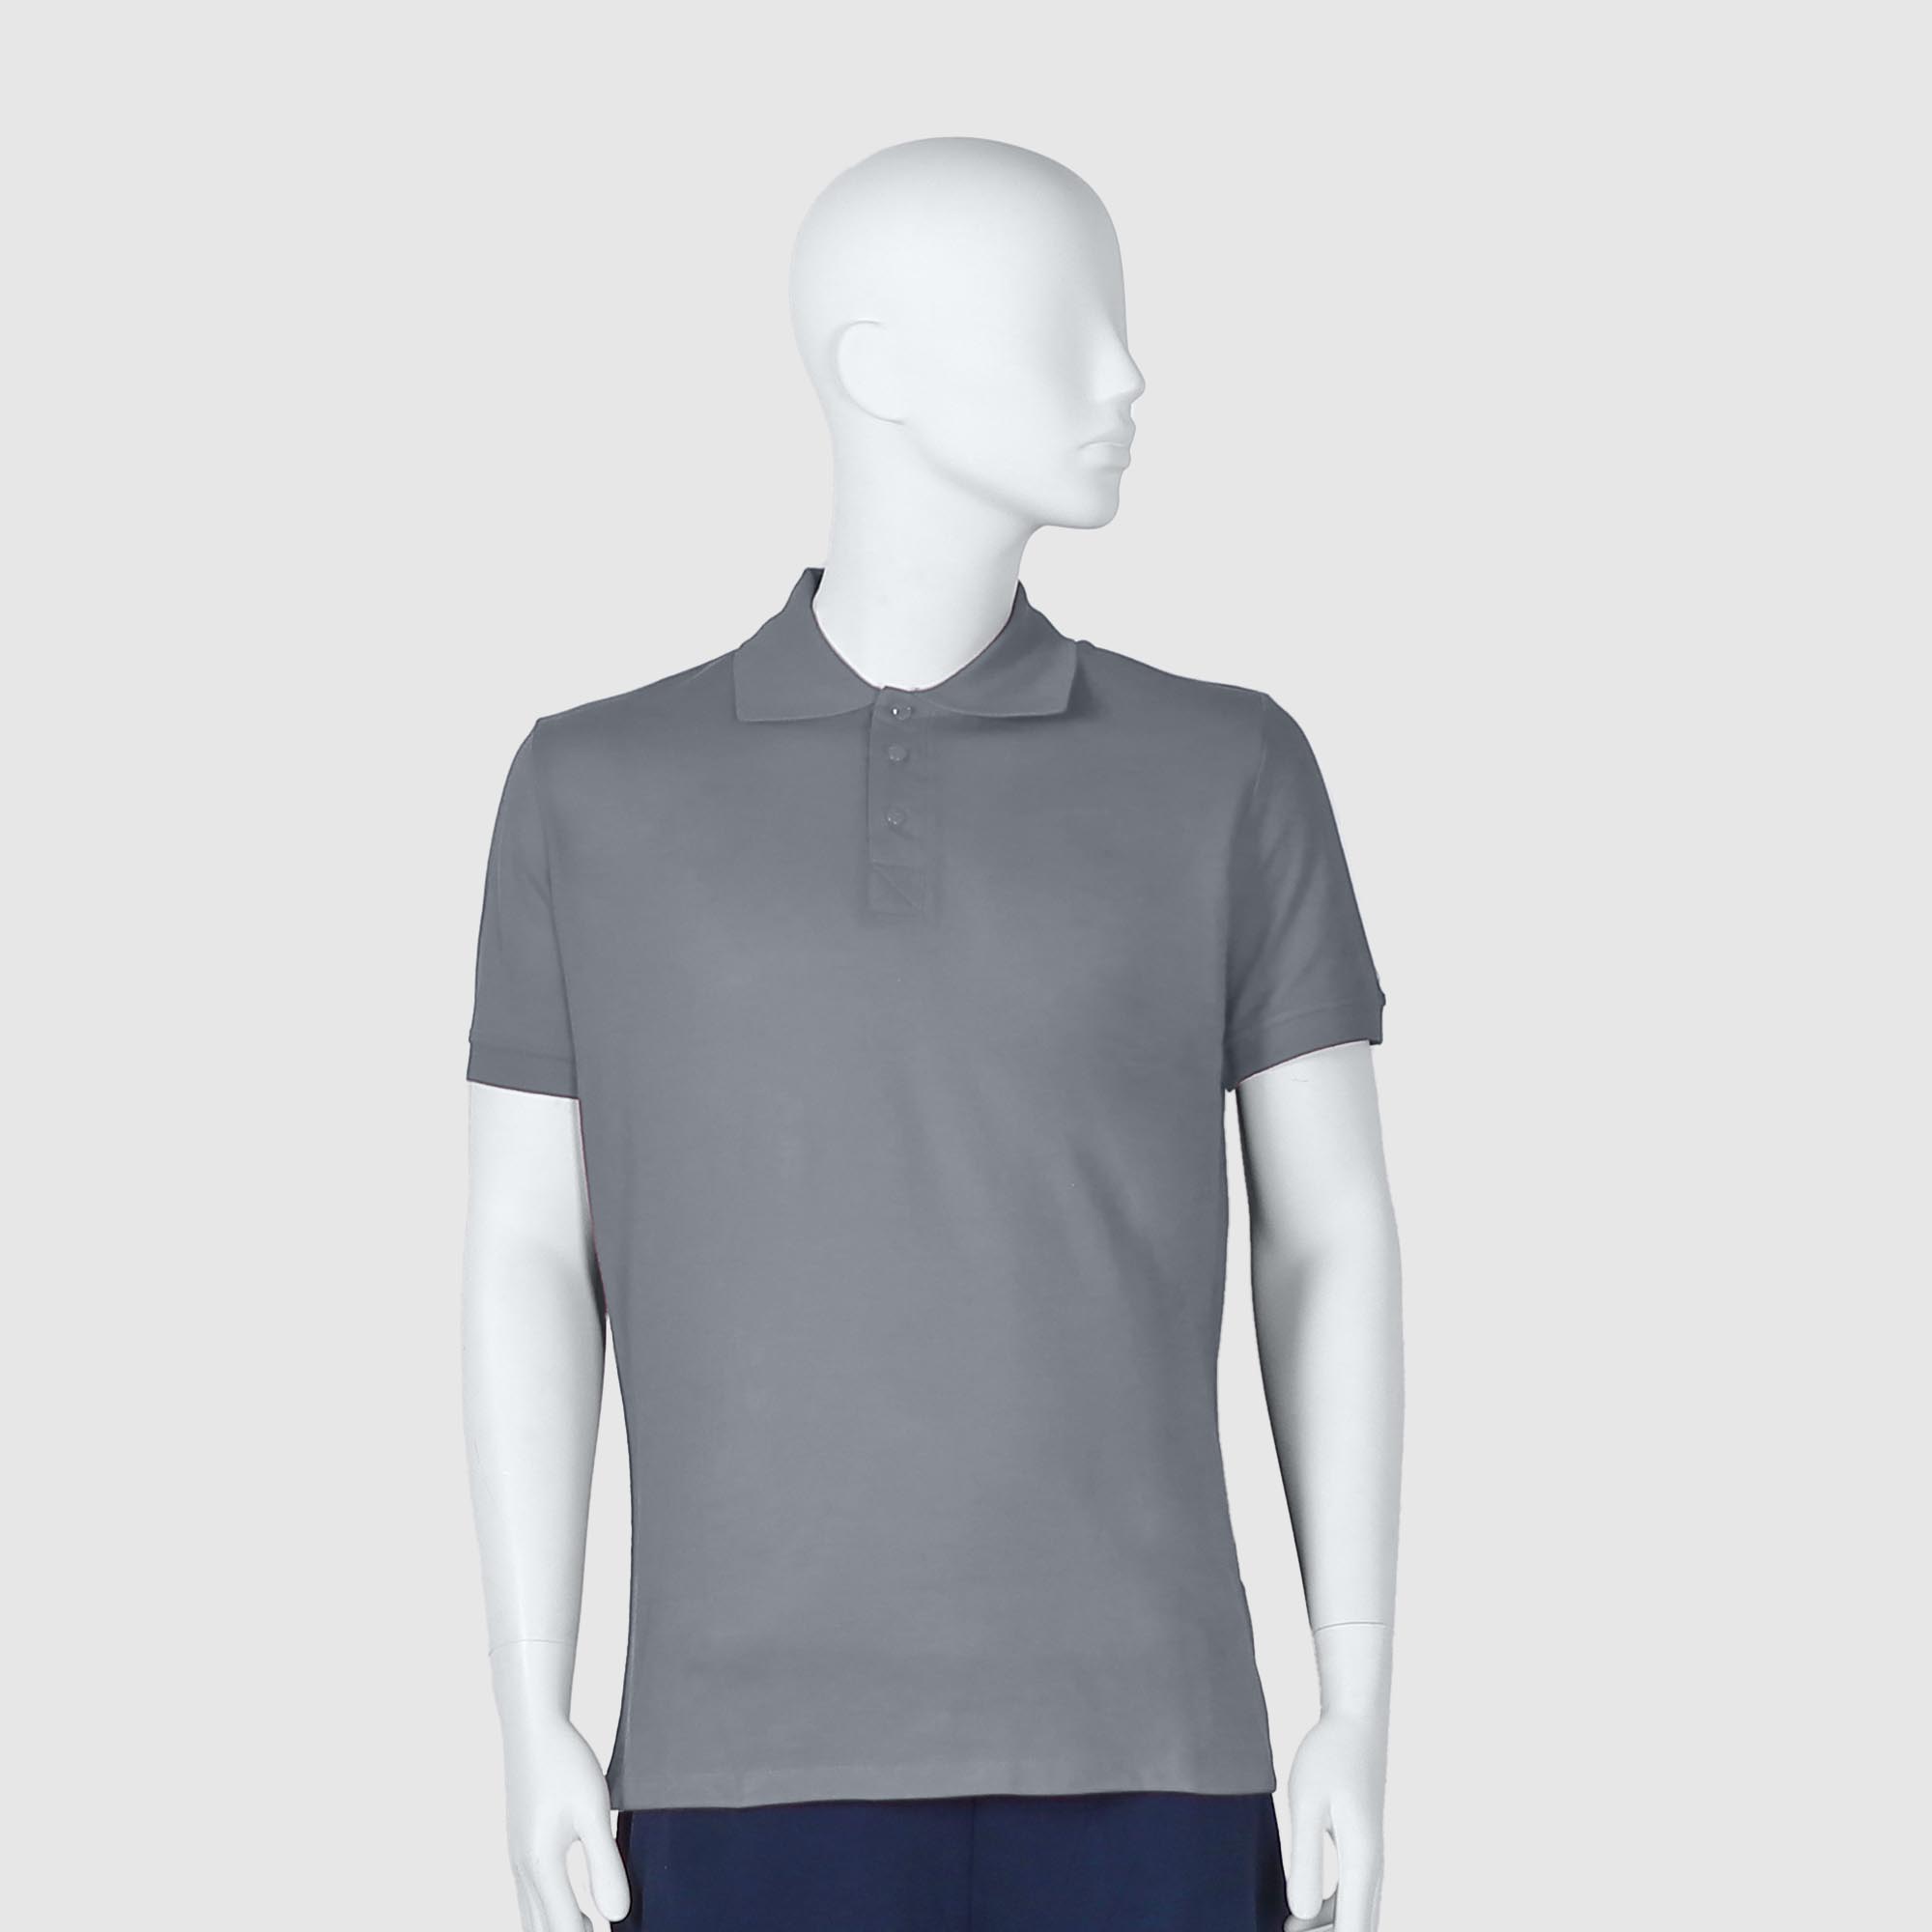 Мужская футболка-поло Diva Teks серая (DTD-11), цвет серый, размер 50-52